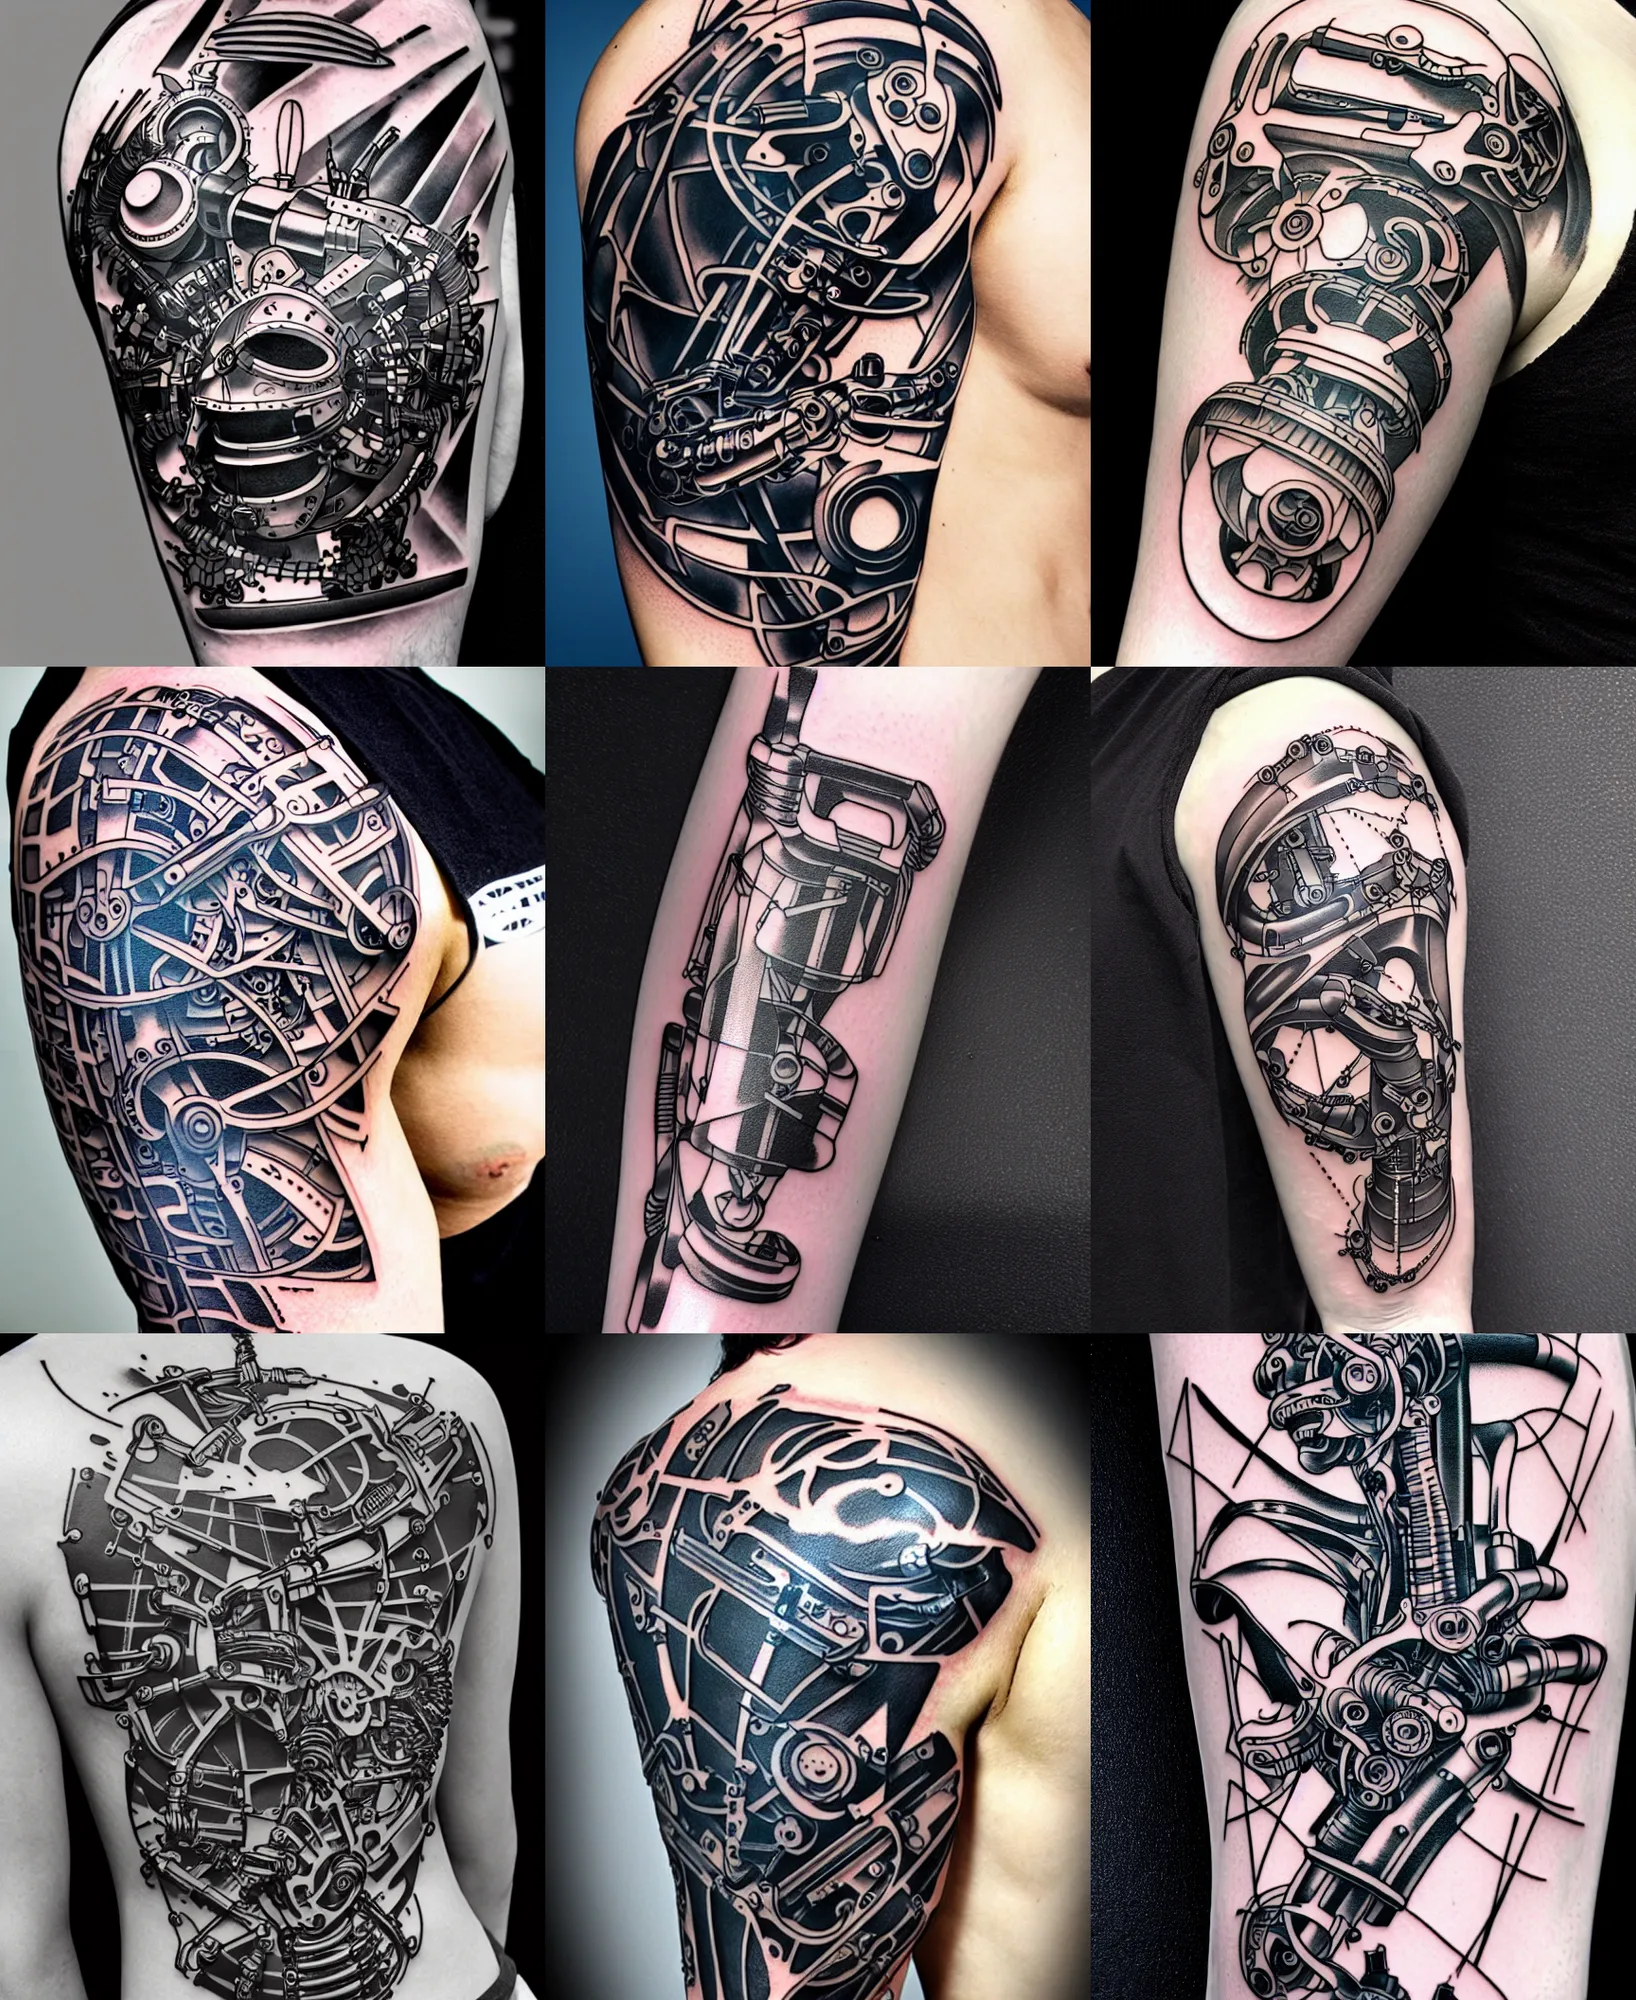 Tattoo Design Stencil biomechanical, Stable Diffusion